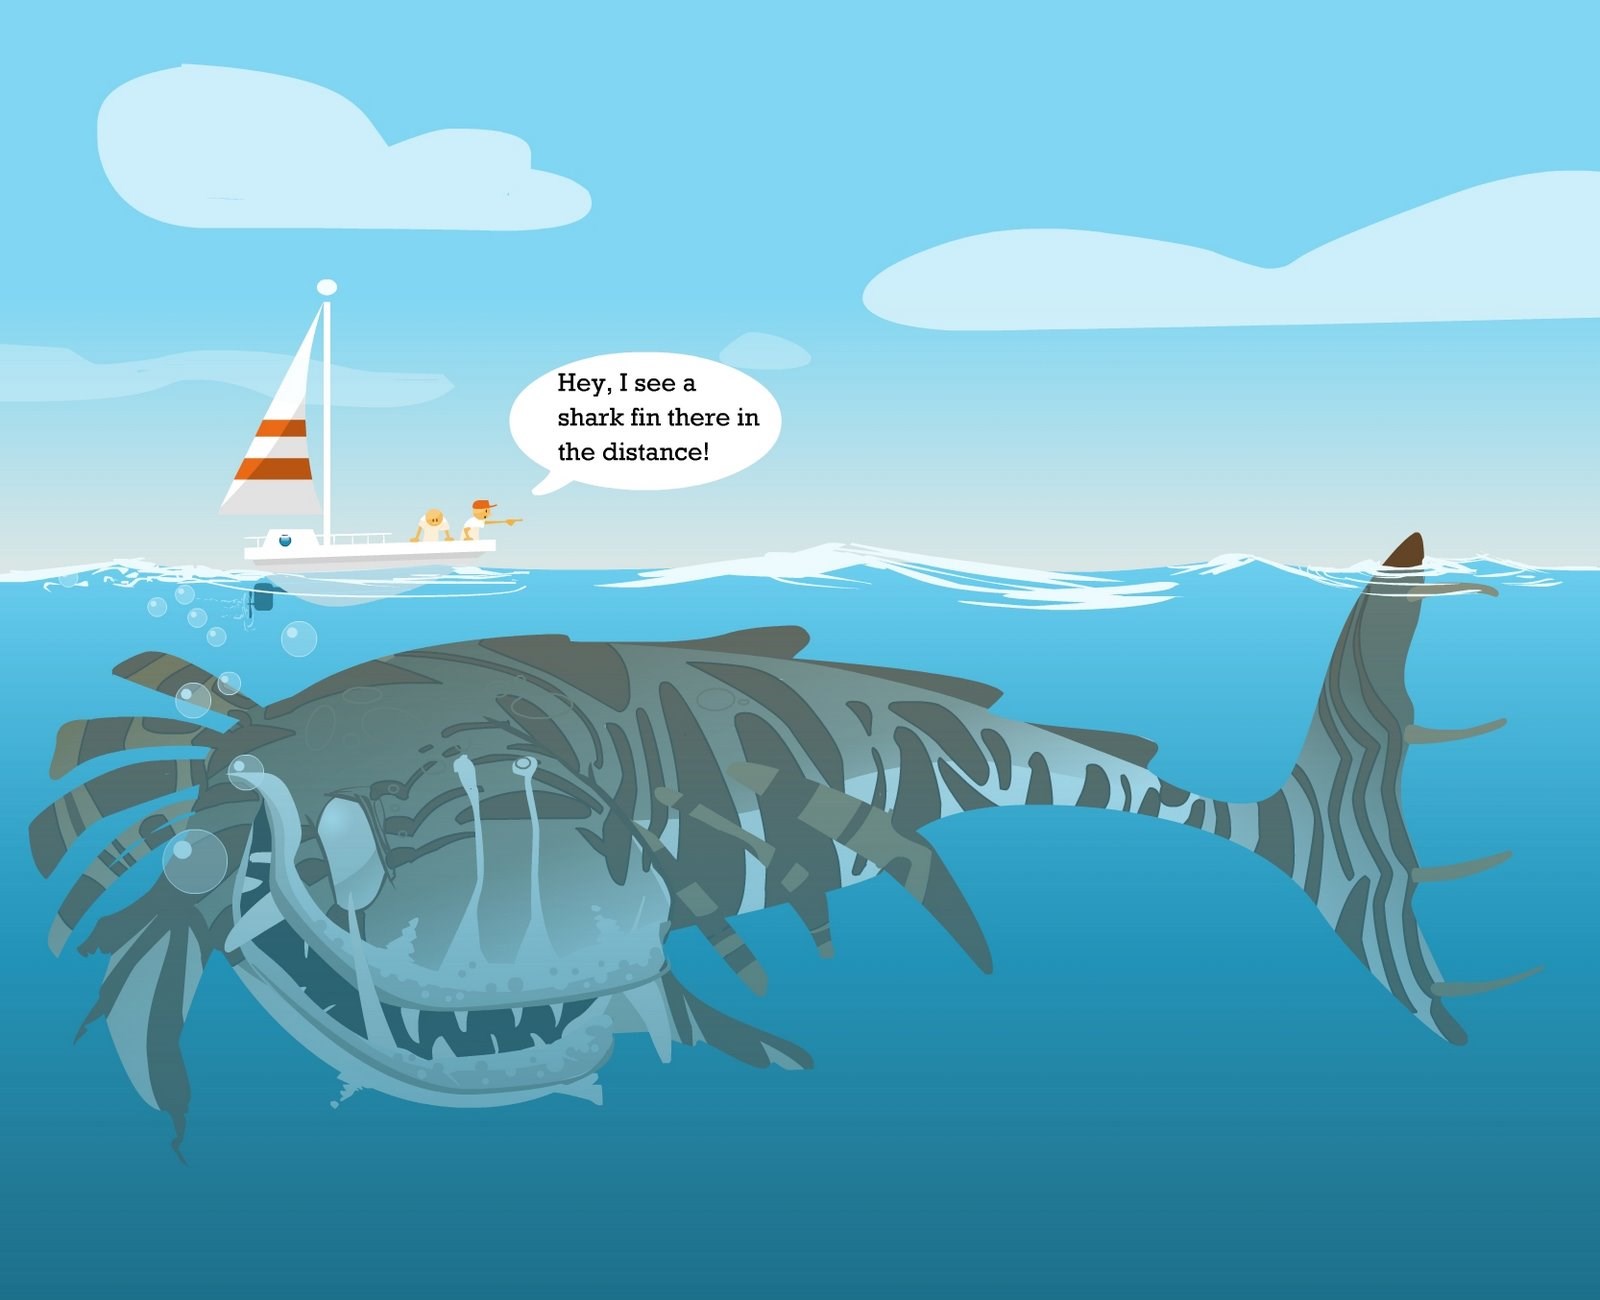 Humor Minimalism Sailing Ship Fish Underwater Drawing Dangerous Quote Sea Clouds Boat Sea Monsters 1600x1300